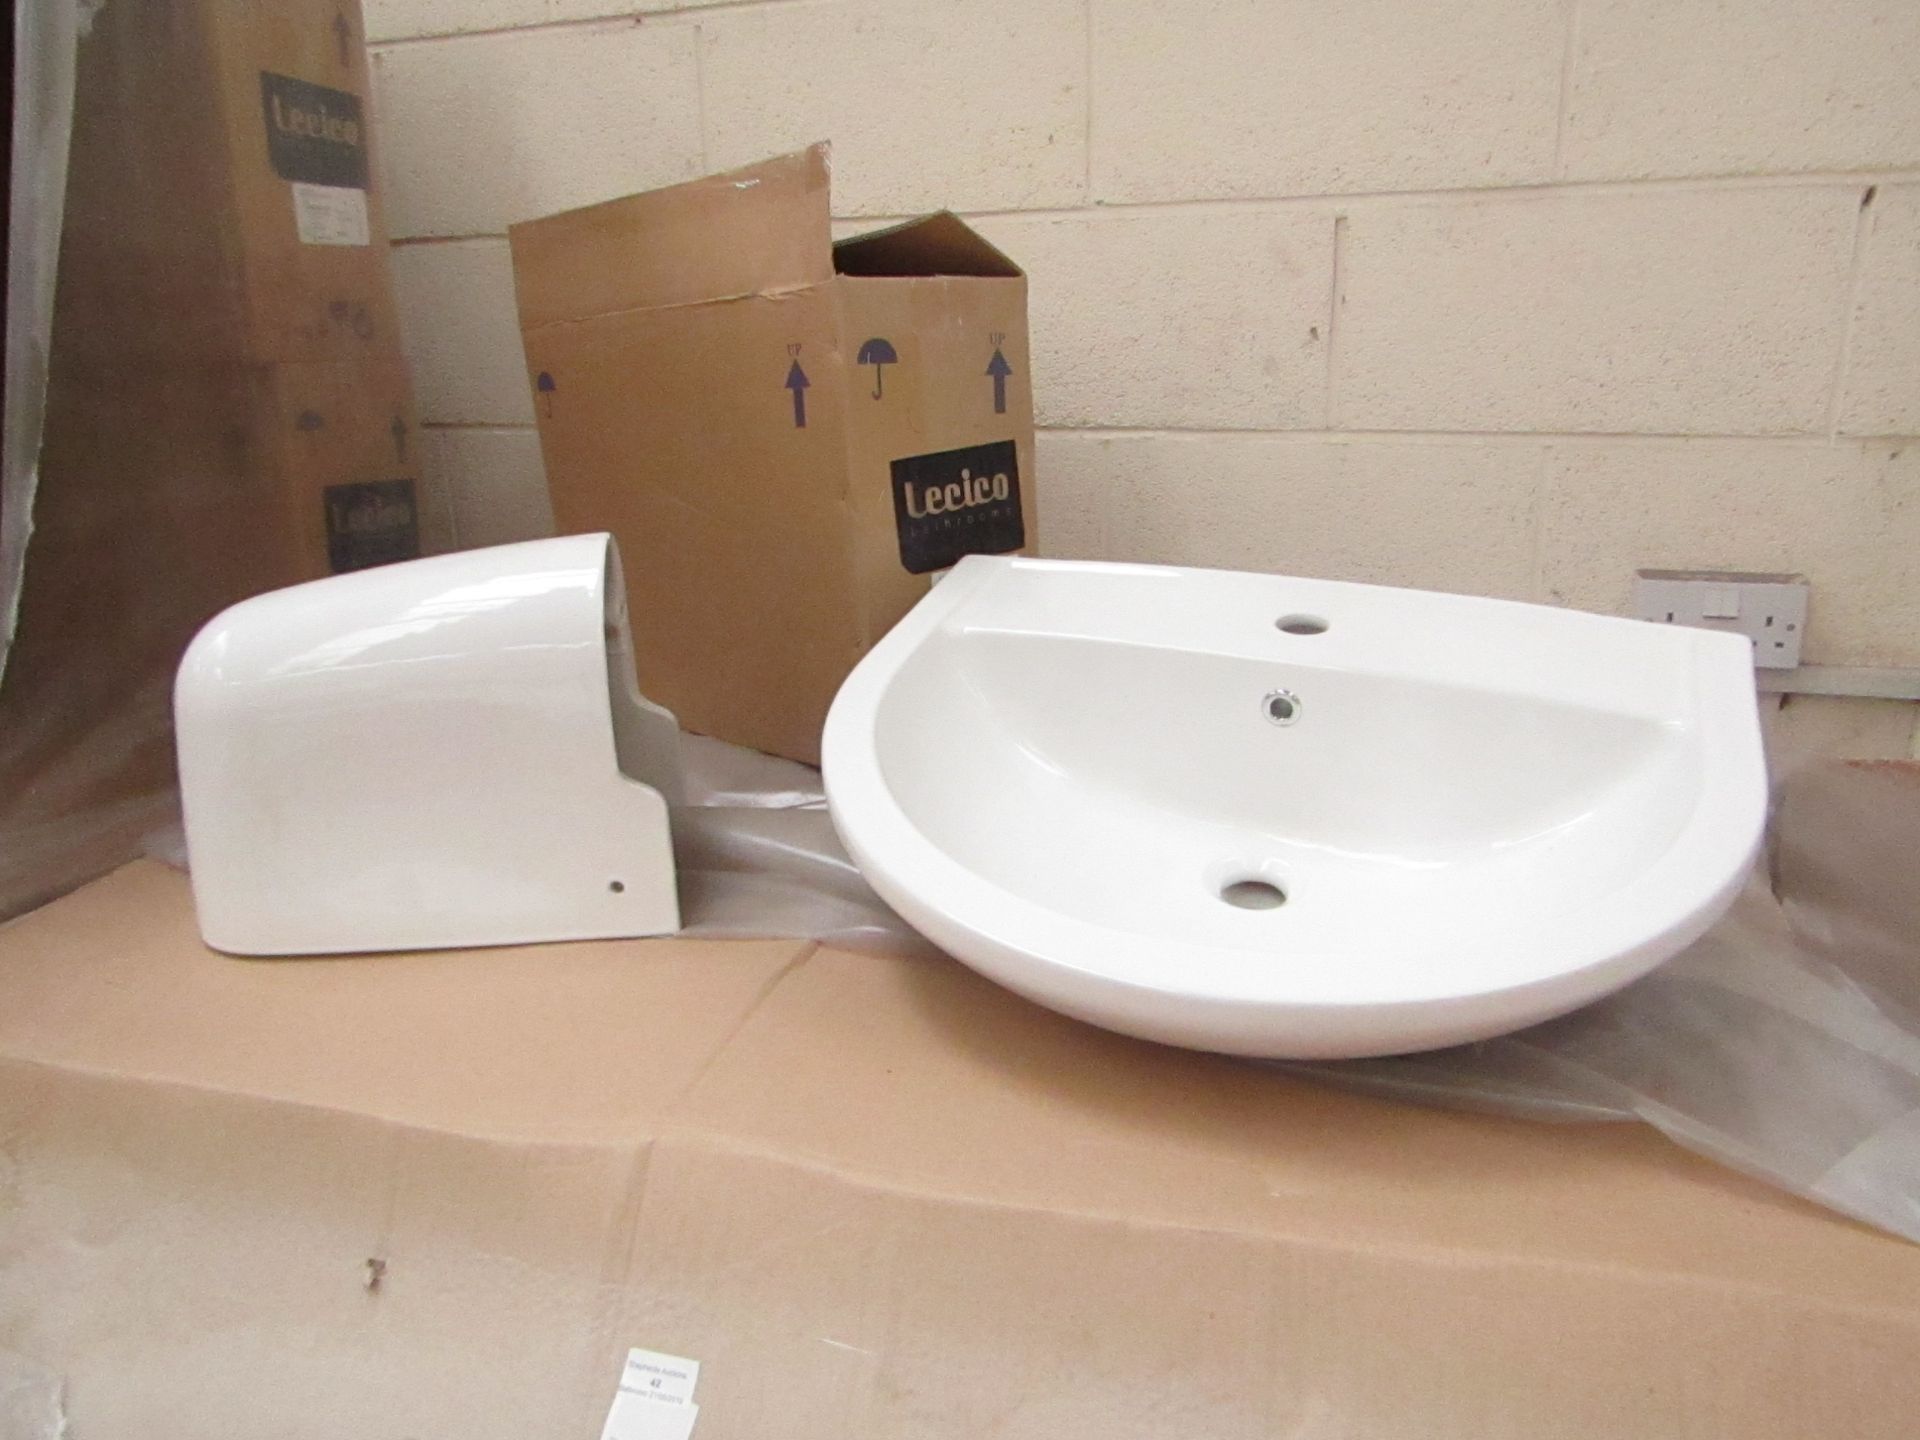 Lecico Remini 59cm 1 tap hole basin with Remini semi pedestal, unused and boxed